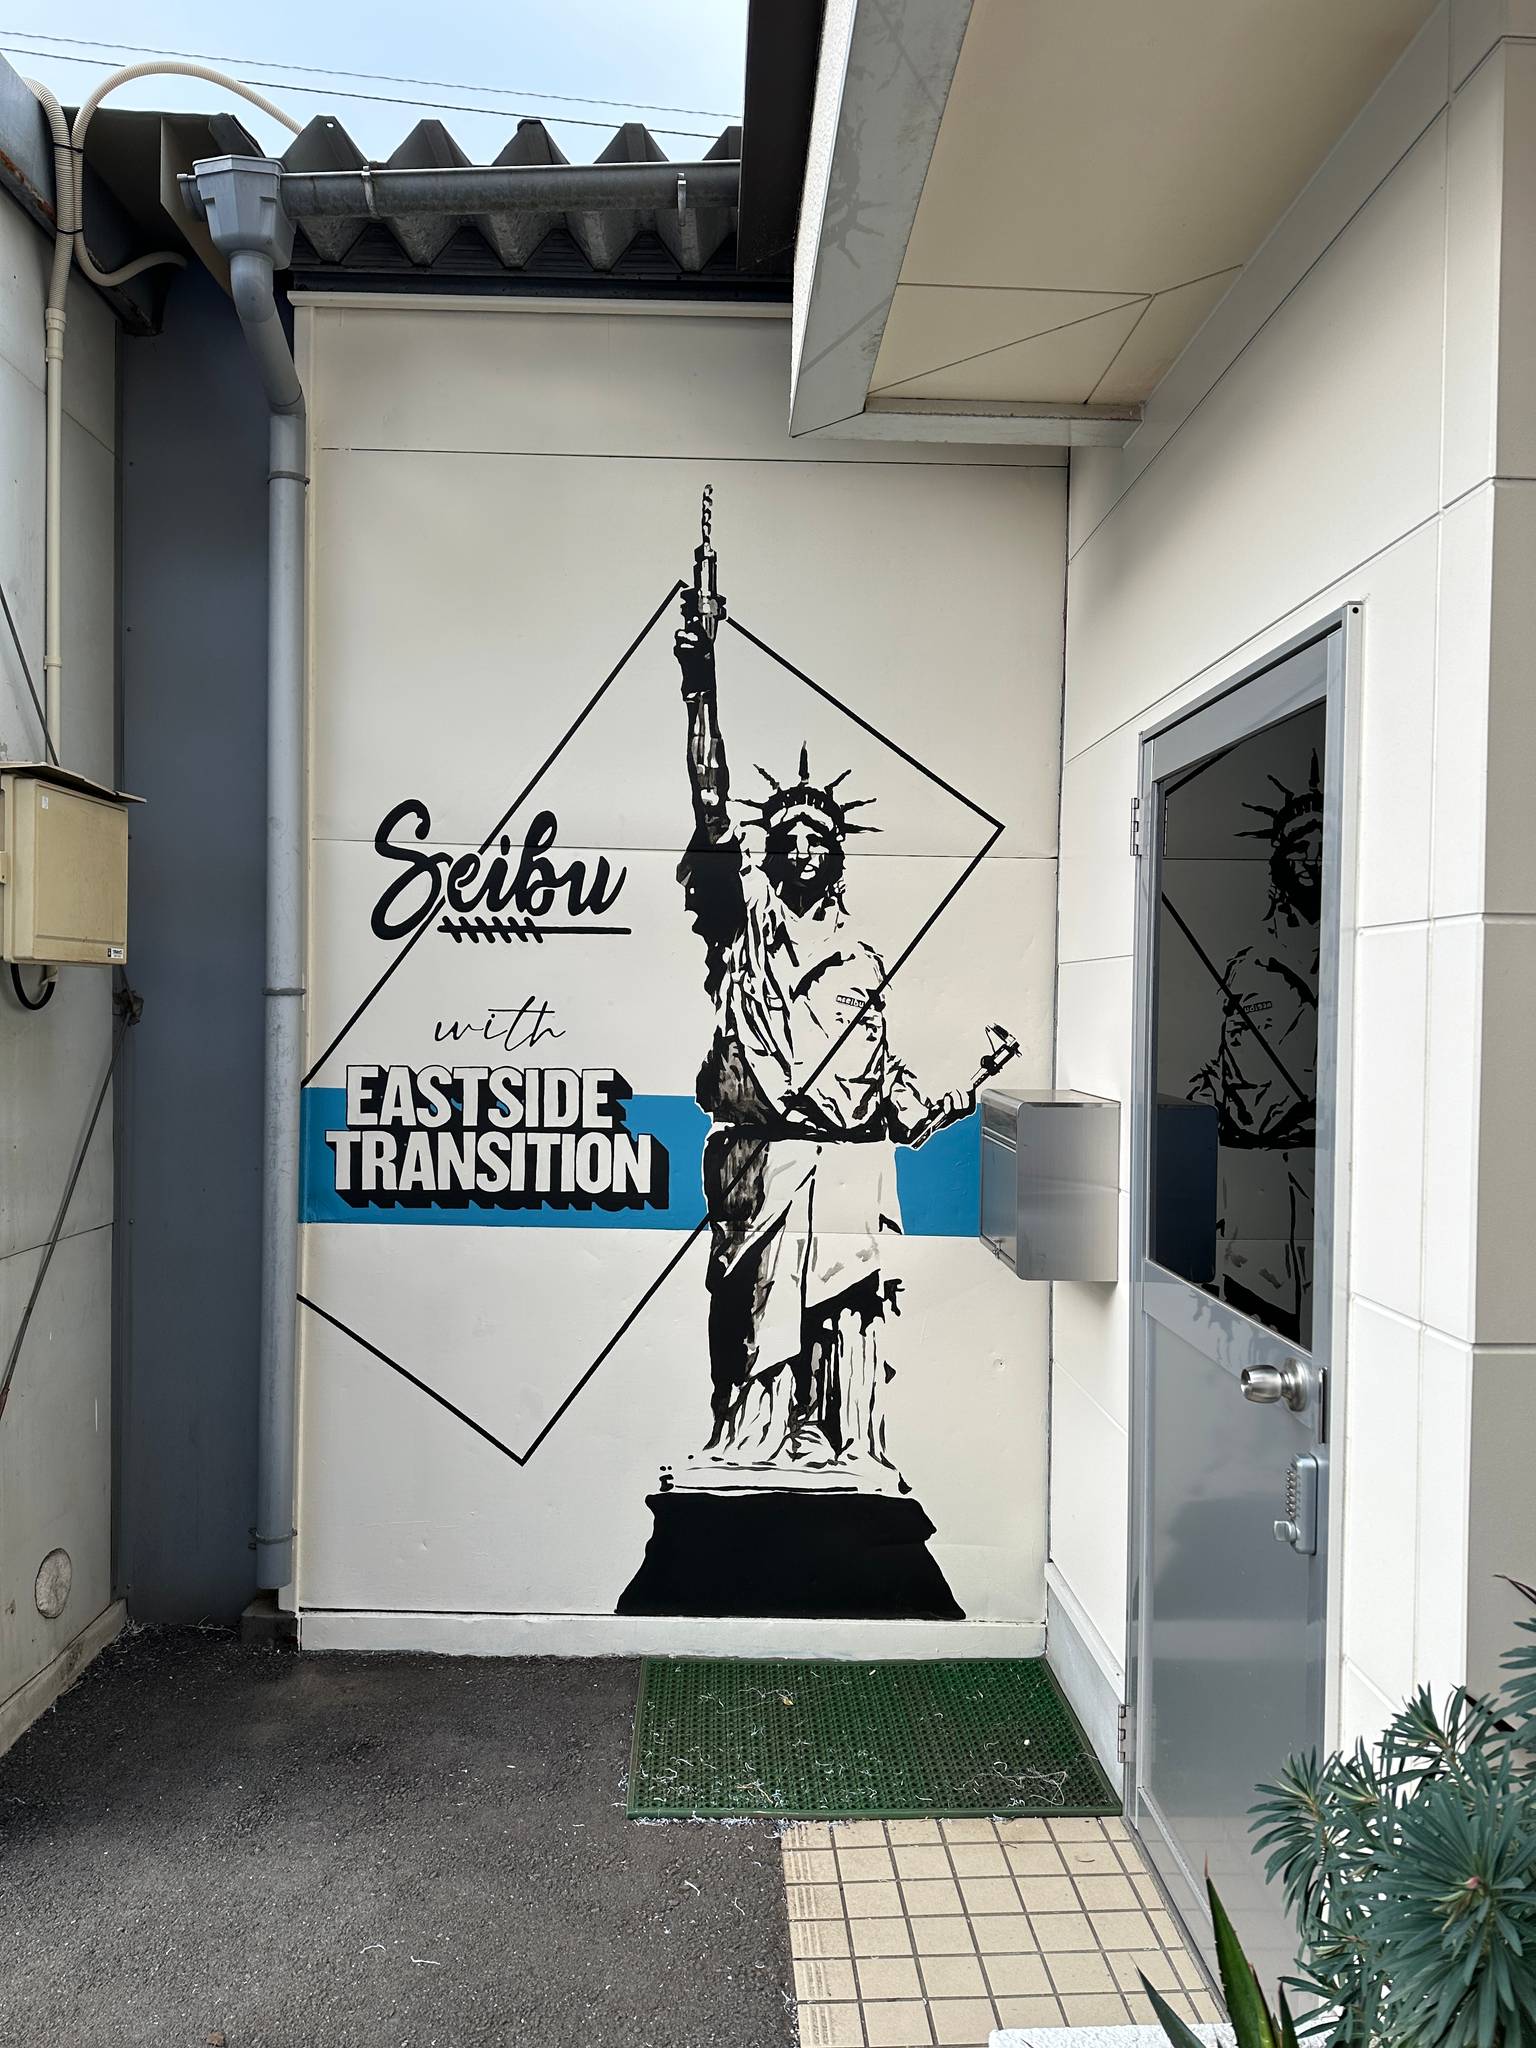 Eastside Transition&mdash;SEIBU